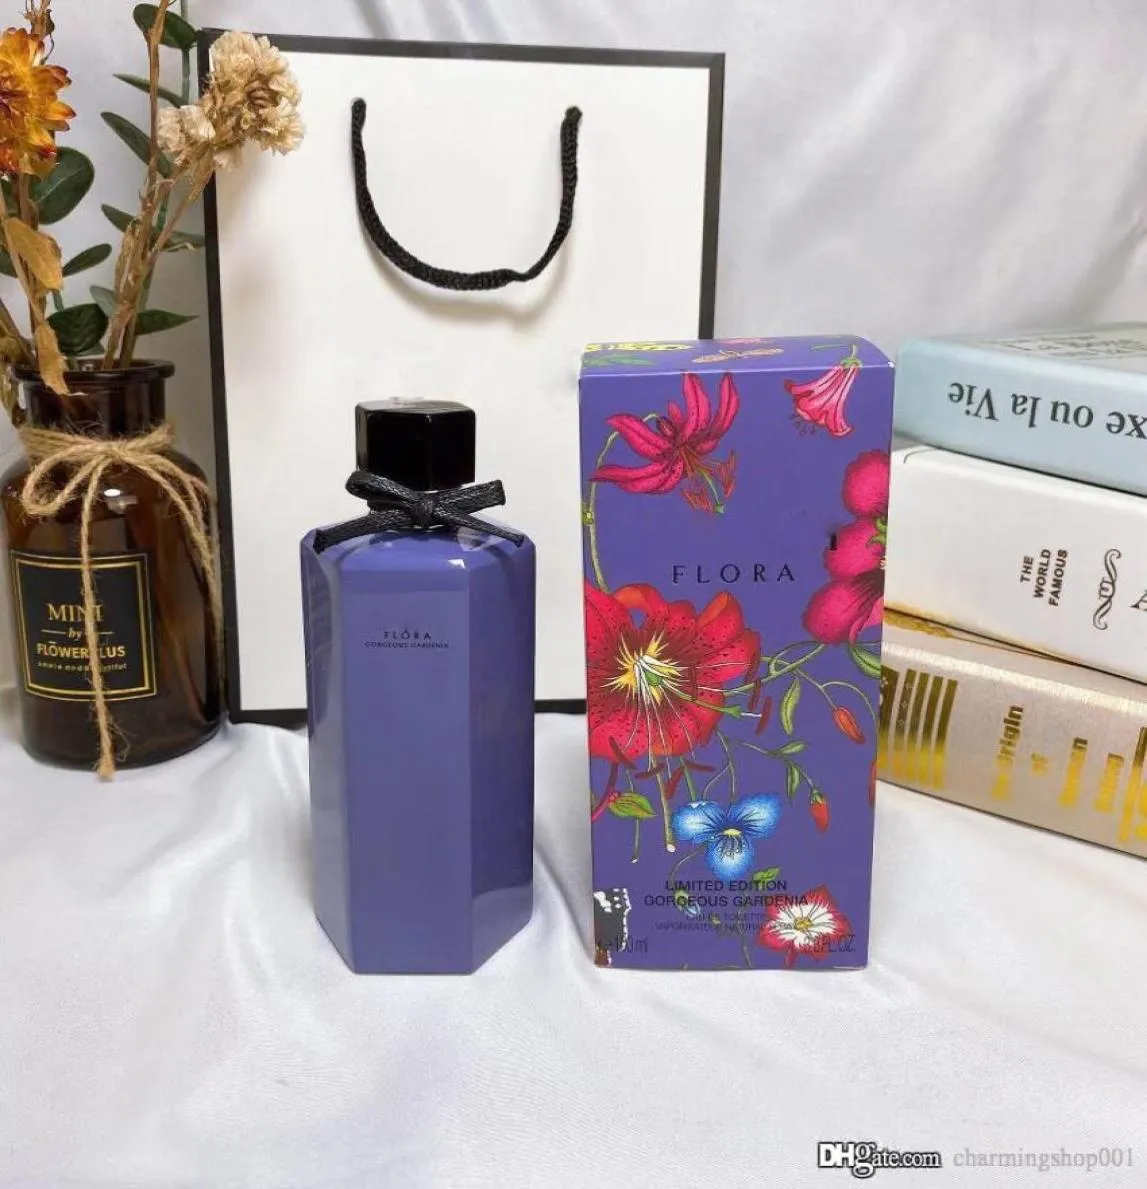 Flora Perfume Woman spray Gorgeous Gardenia Limited Edition 100ml Lady Gift longlasting fragrance high quality affordable fa5440365